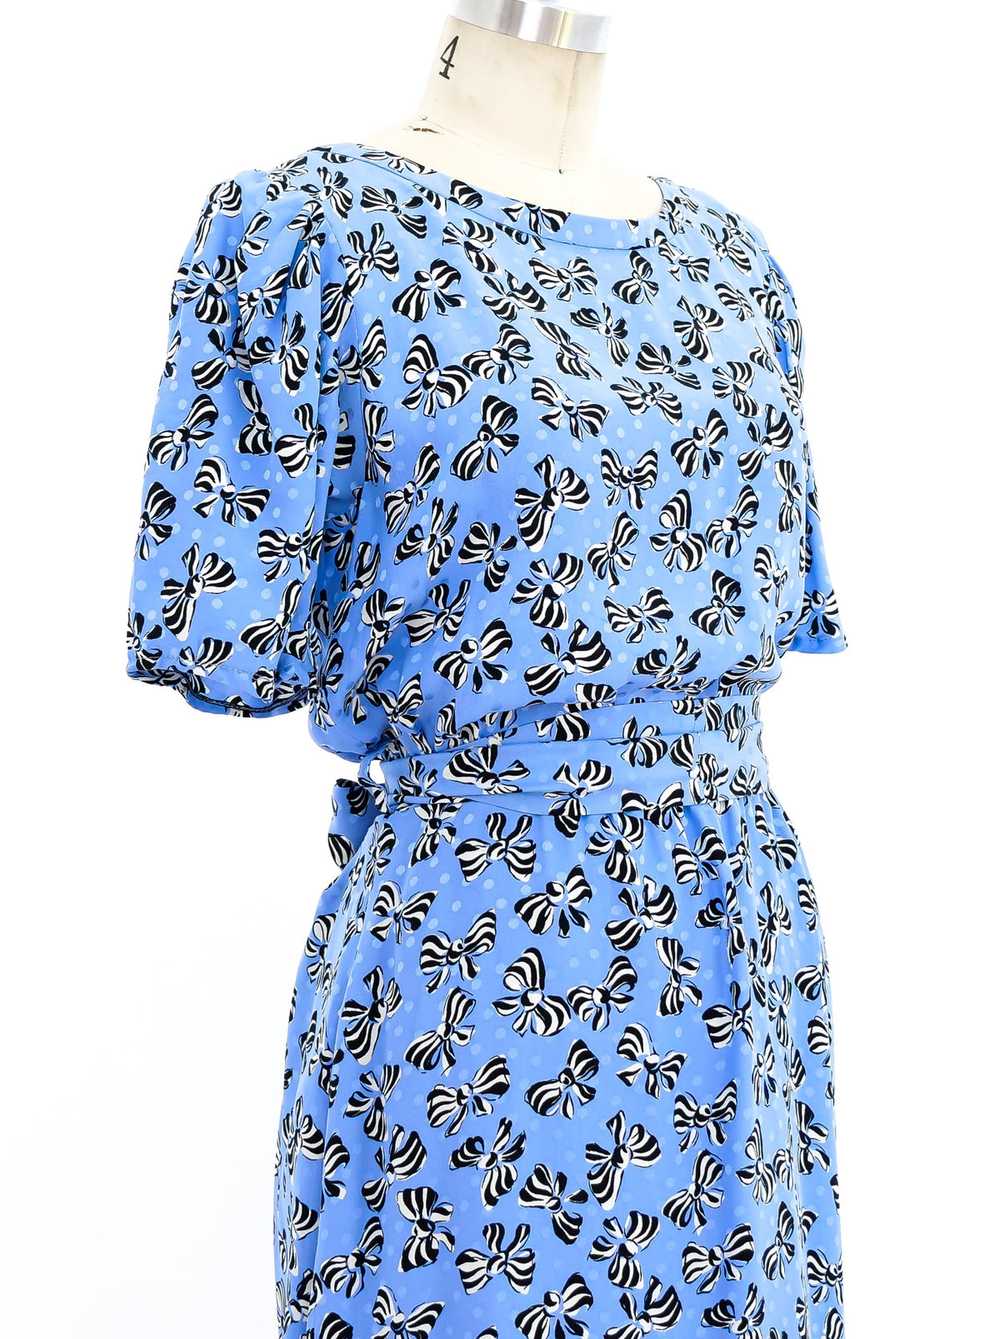 Yves Saint Laurent Bow Print Dress - image 4